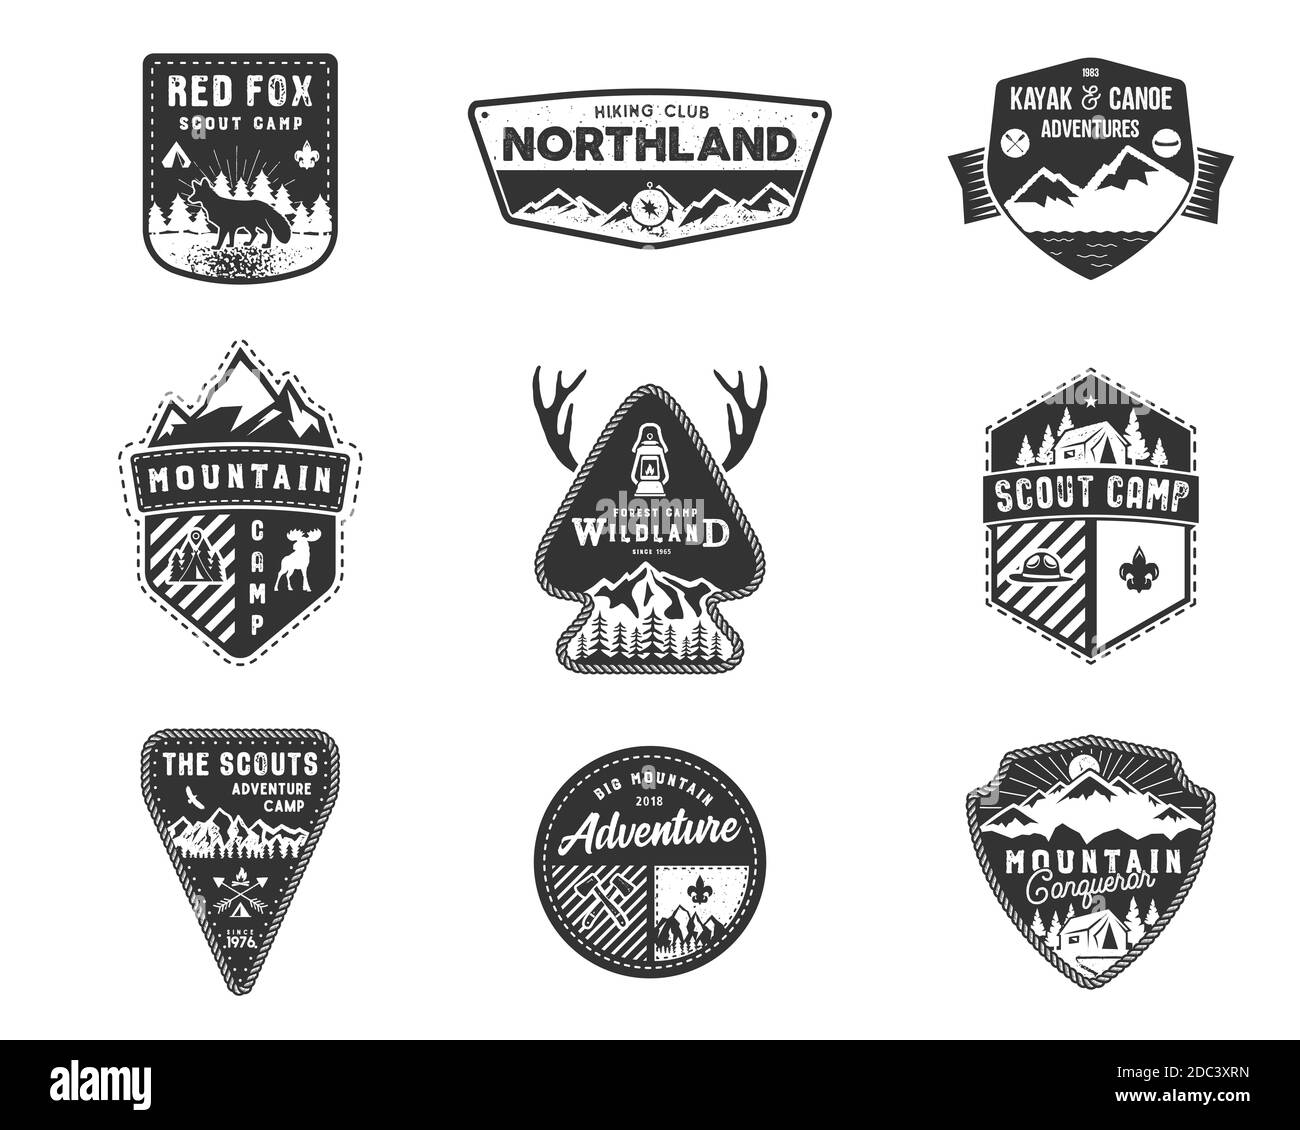 Traveling, outdoor badge collection. Scout camp emblem set. Vintage hand drawn design. Black, monochrome design. Stock illustration, insignias, rustic Stock Photo